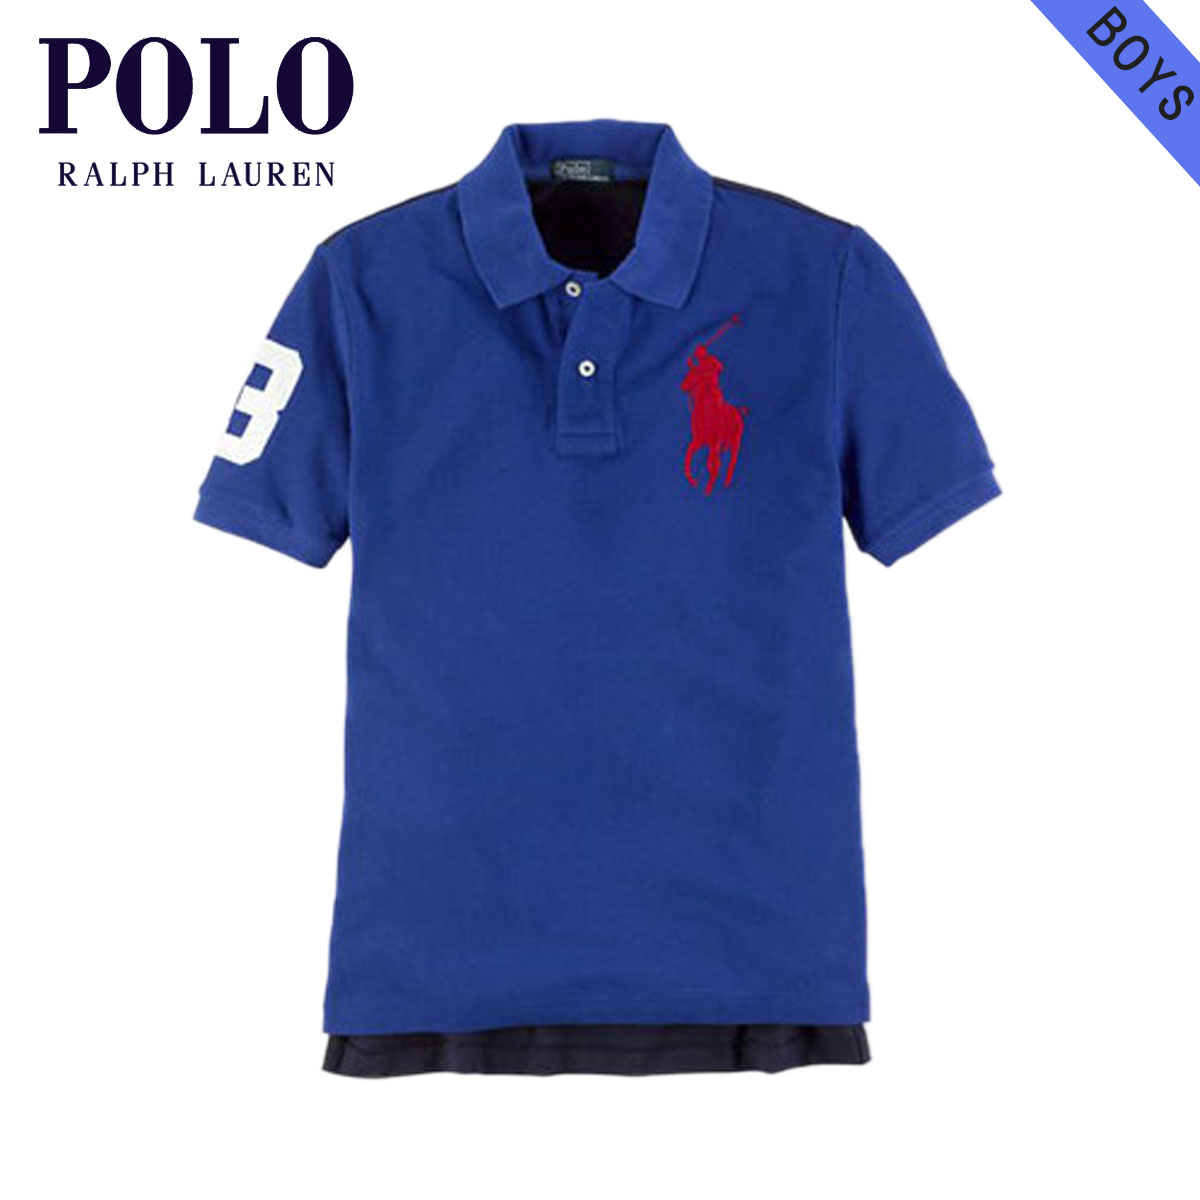 ralph lauren polo children's clothing